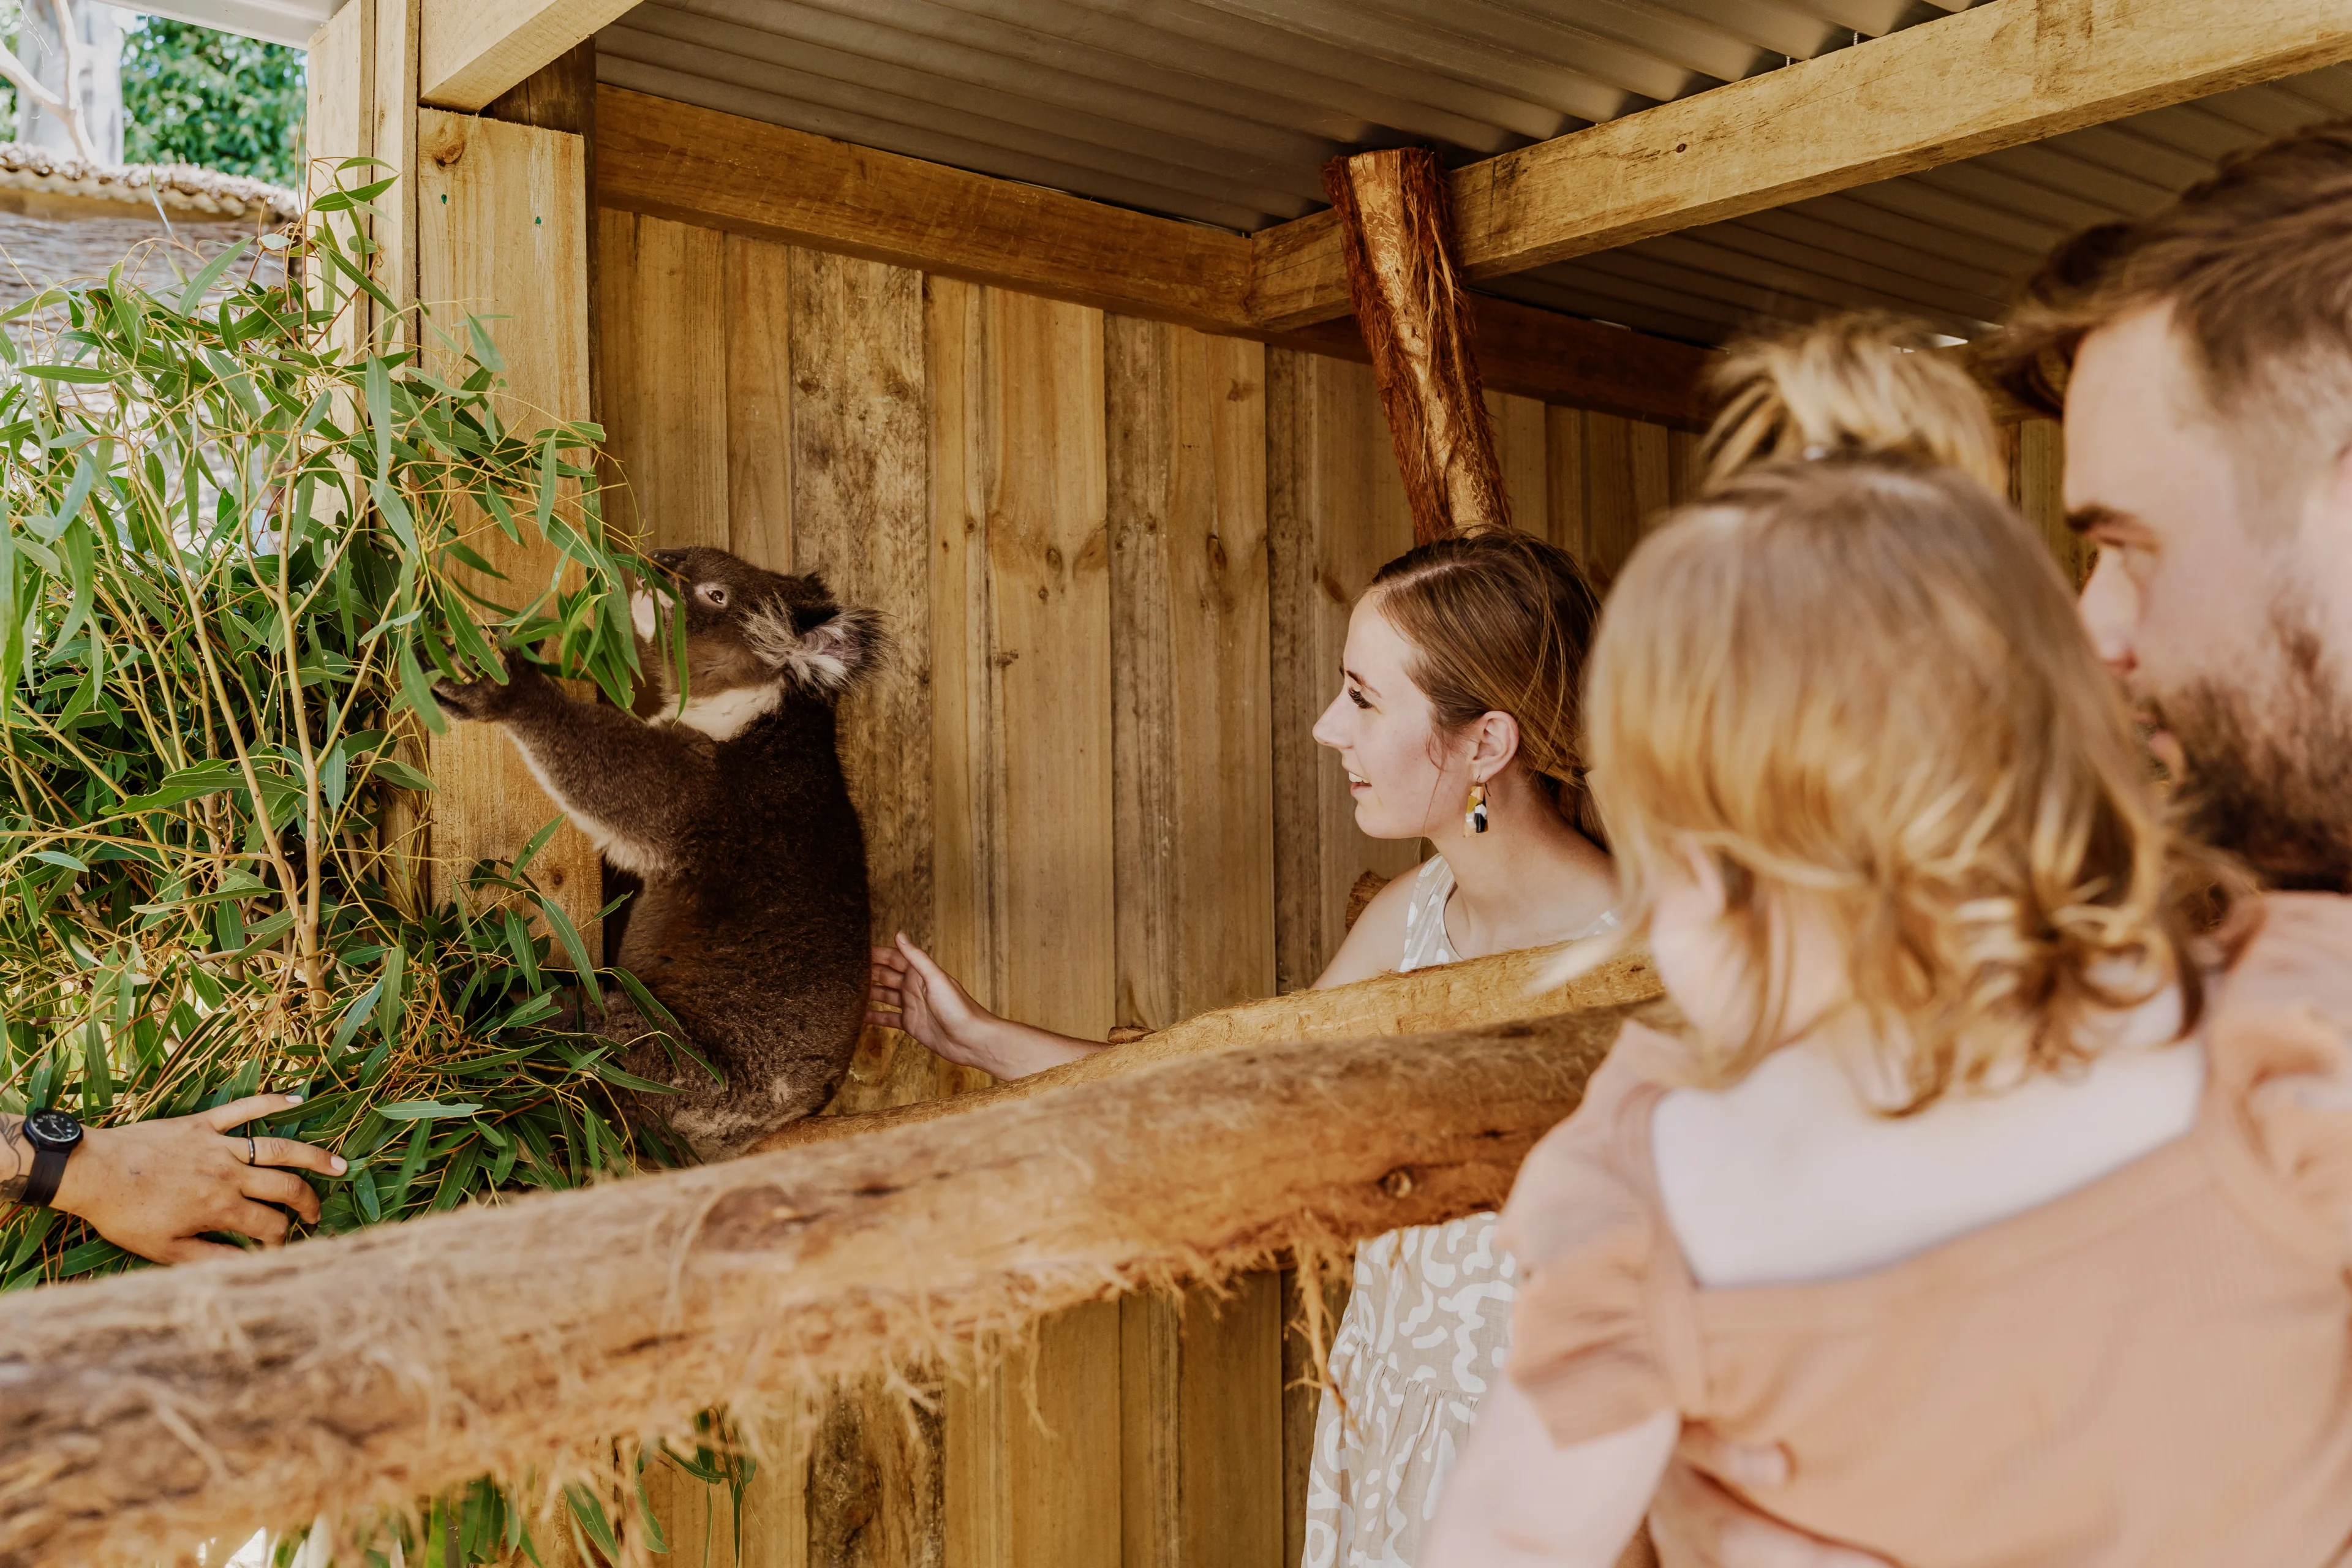 Family on an animal encounter with a koala at Ballarat Wildlife Park